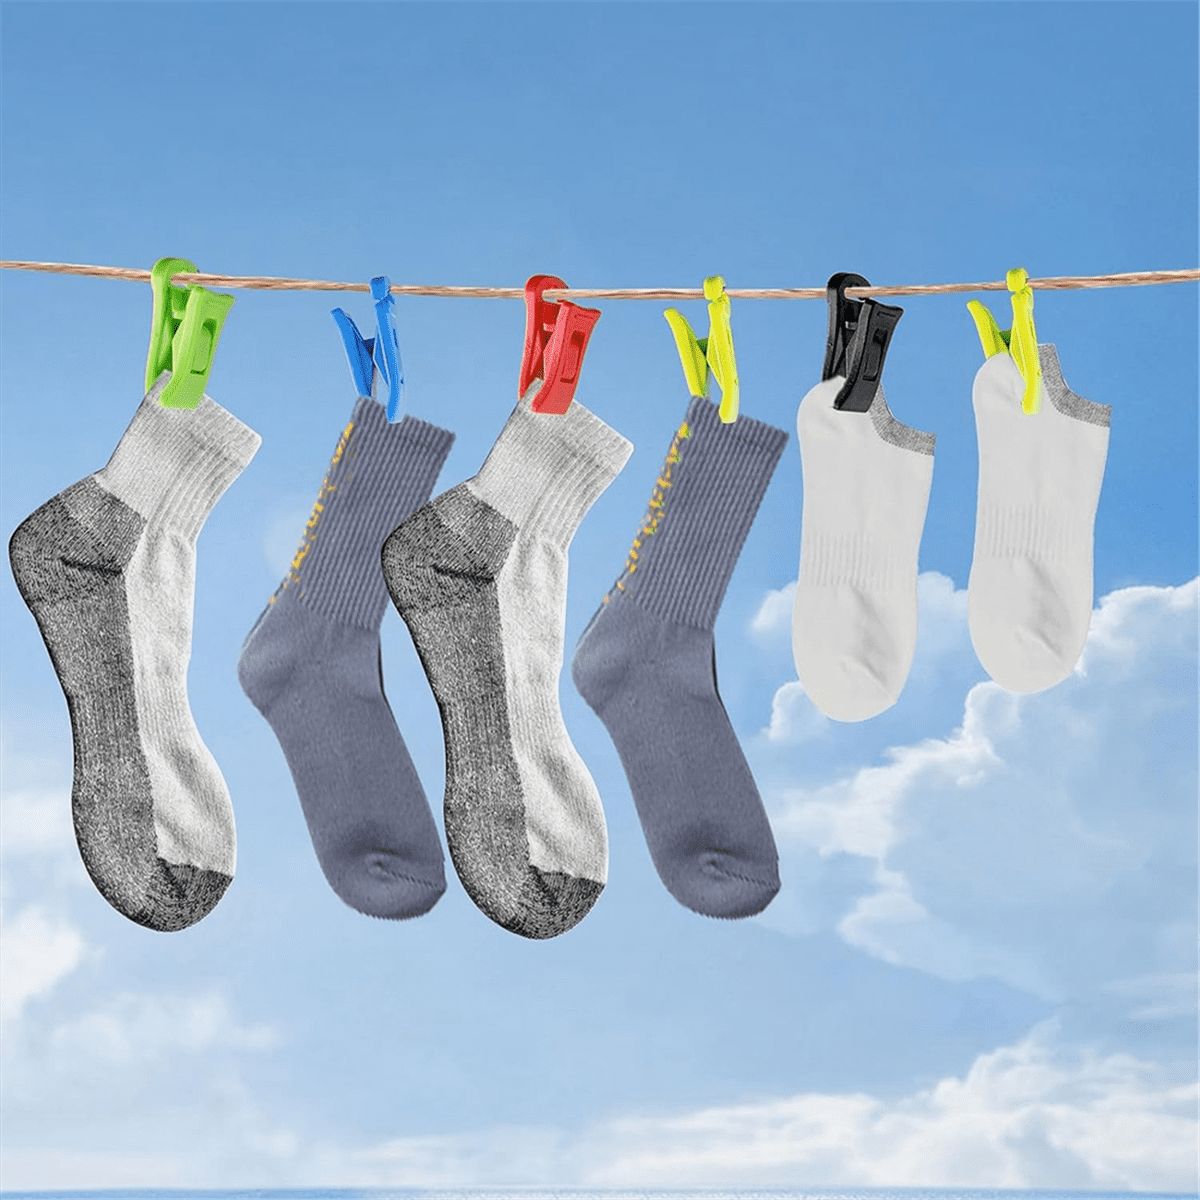 60pcs Sock Clips Sock Organizers Sorters Holders Socks Clip Multifunctional